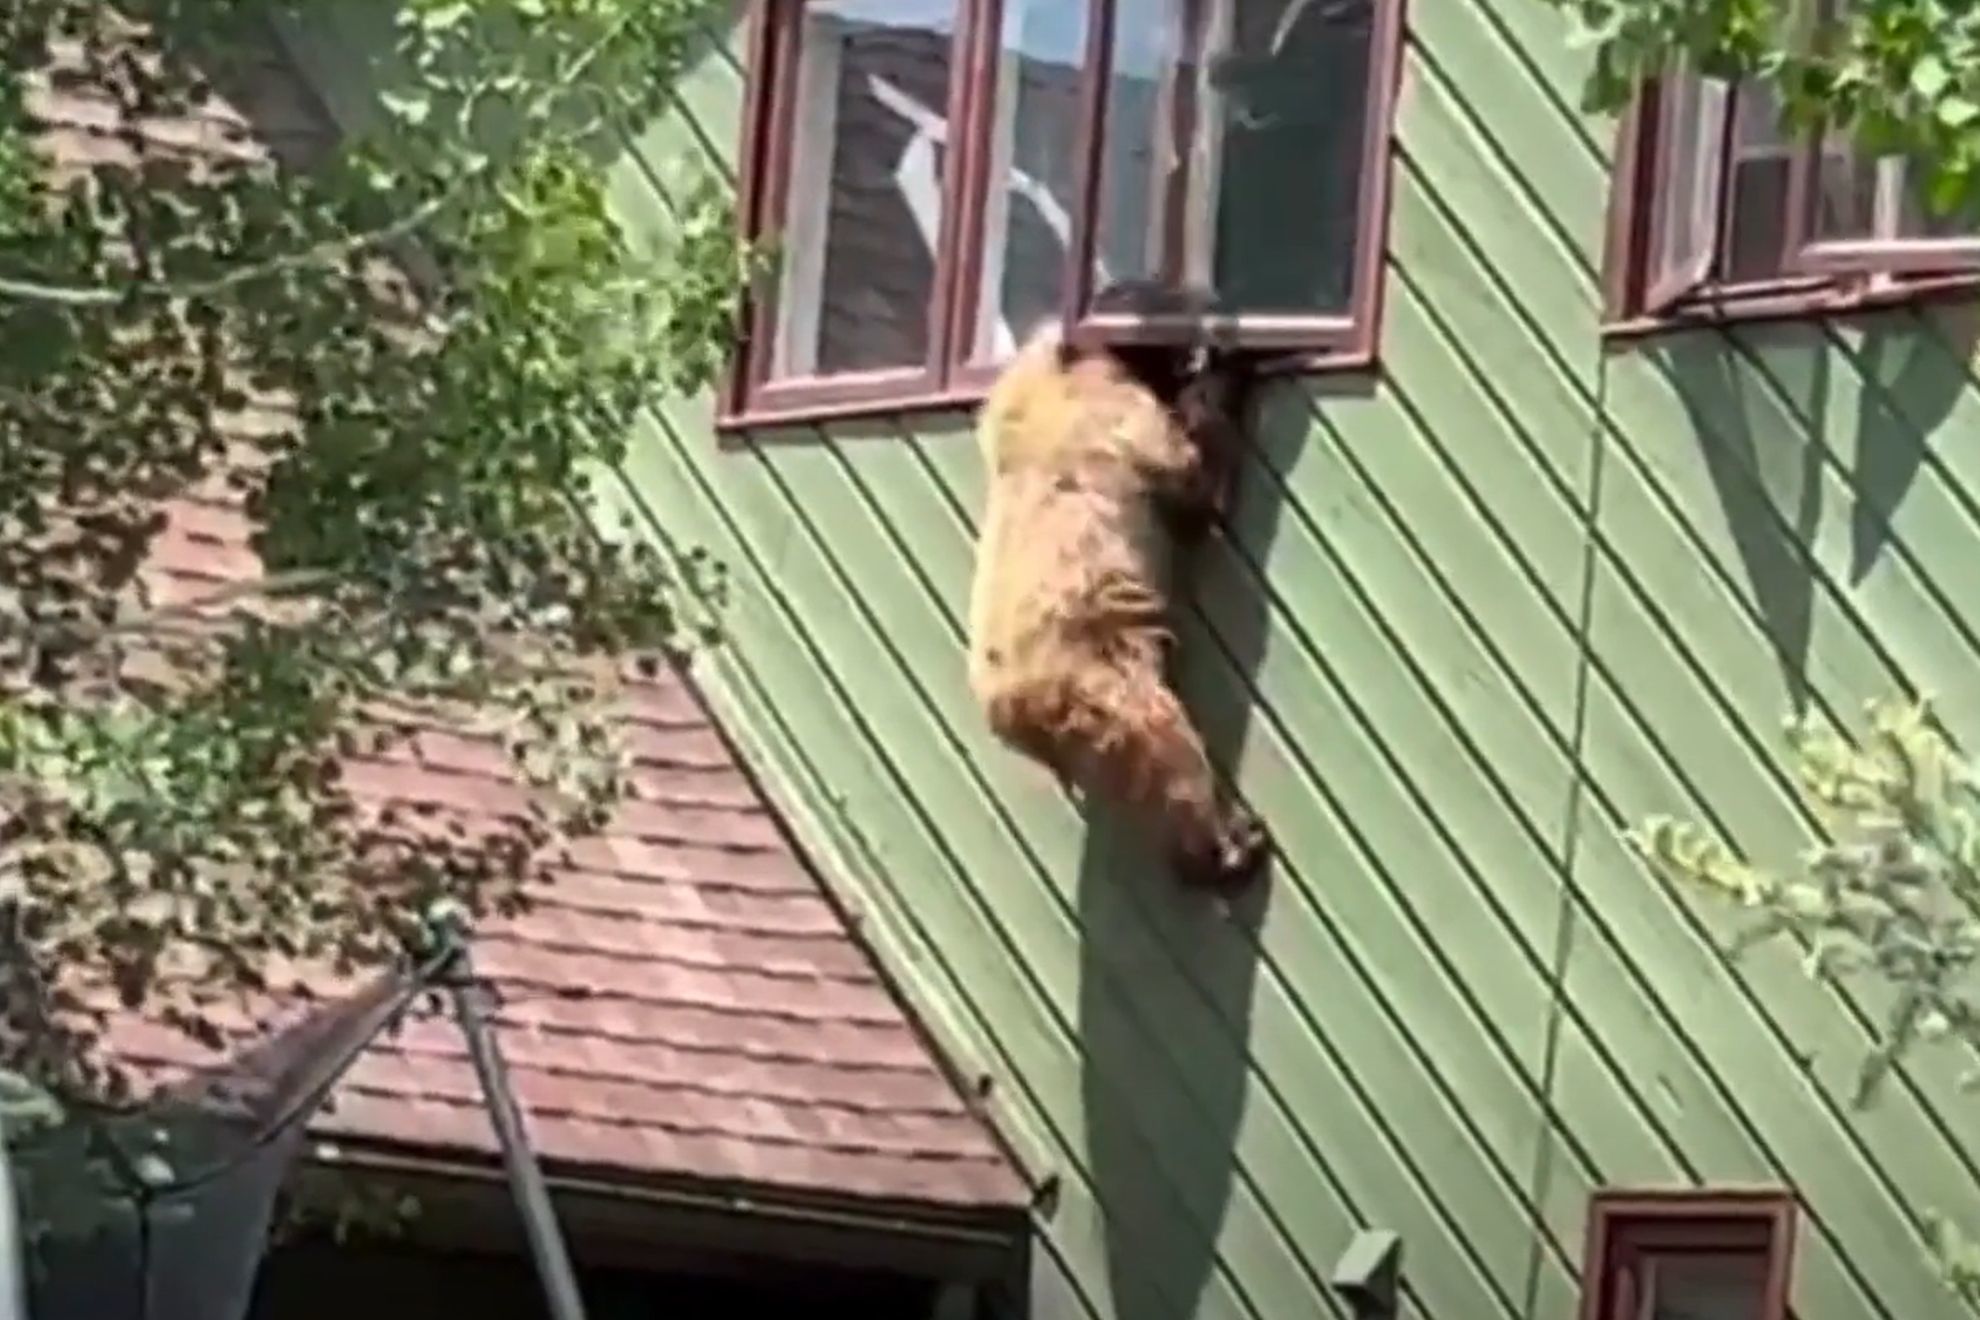 Huge bear climbs through the window of a Colorado home... and devours some pork chops!